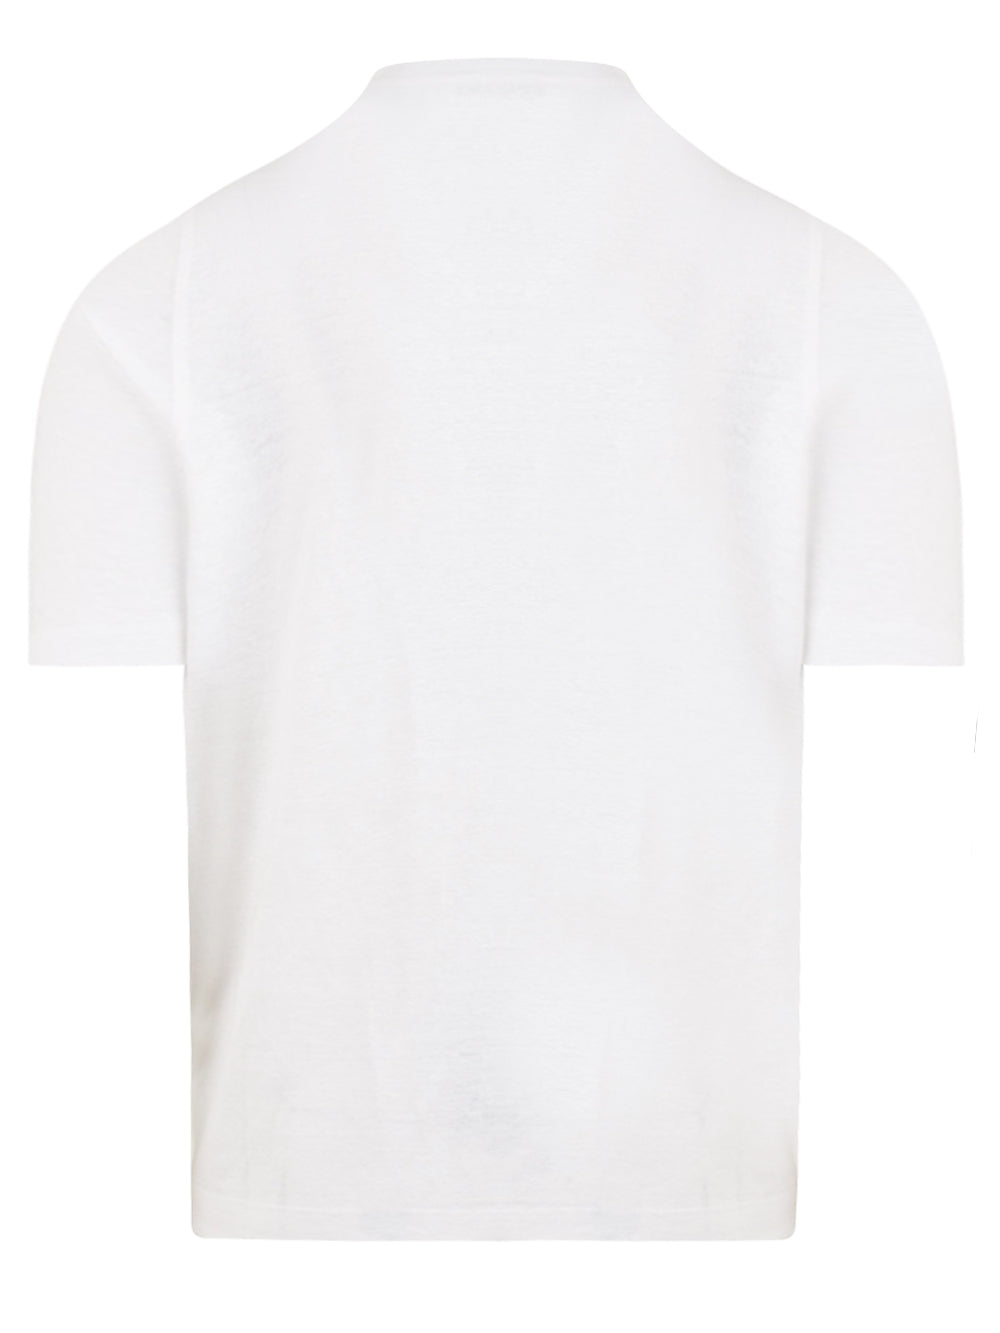 Optical White T-shirt